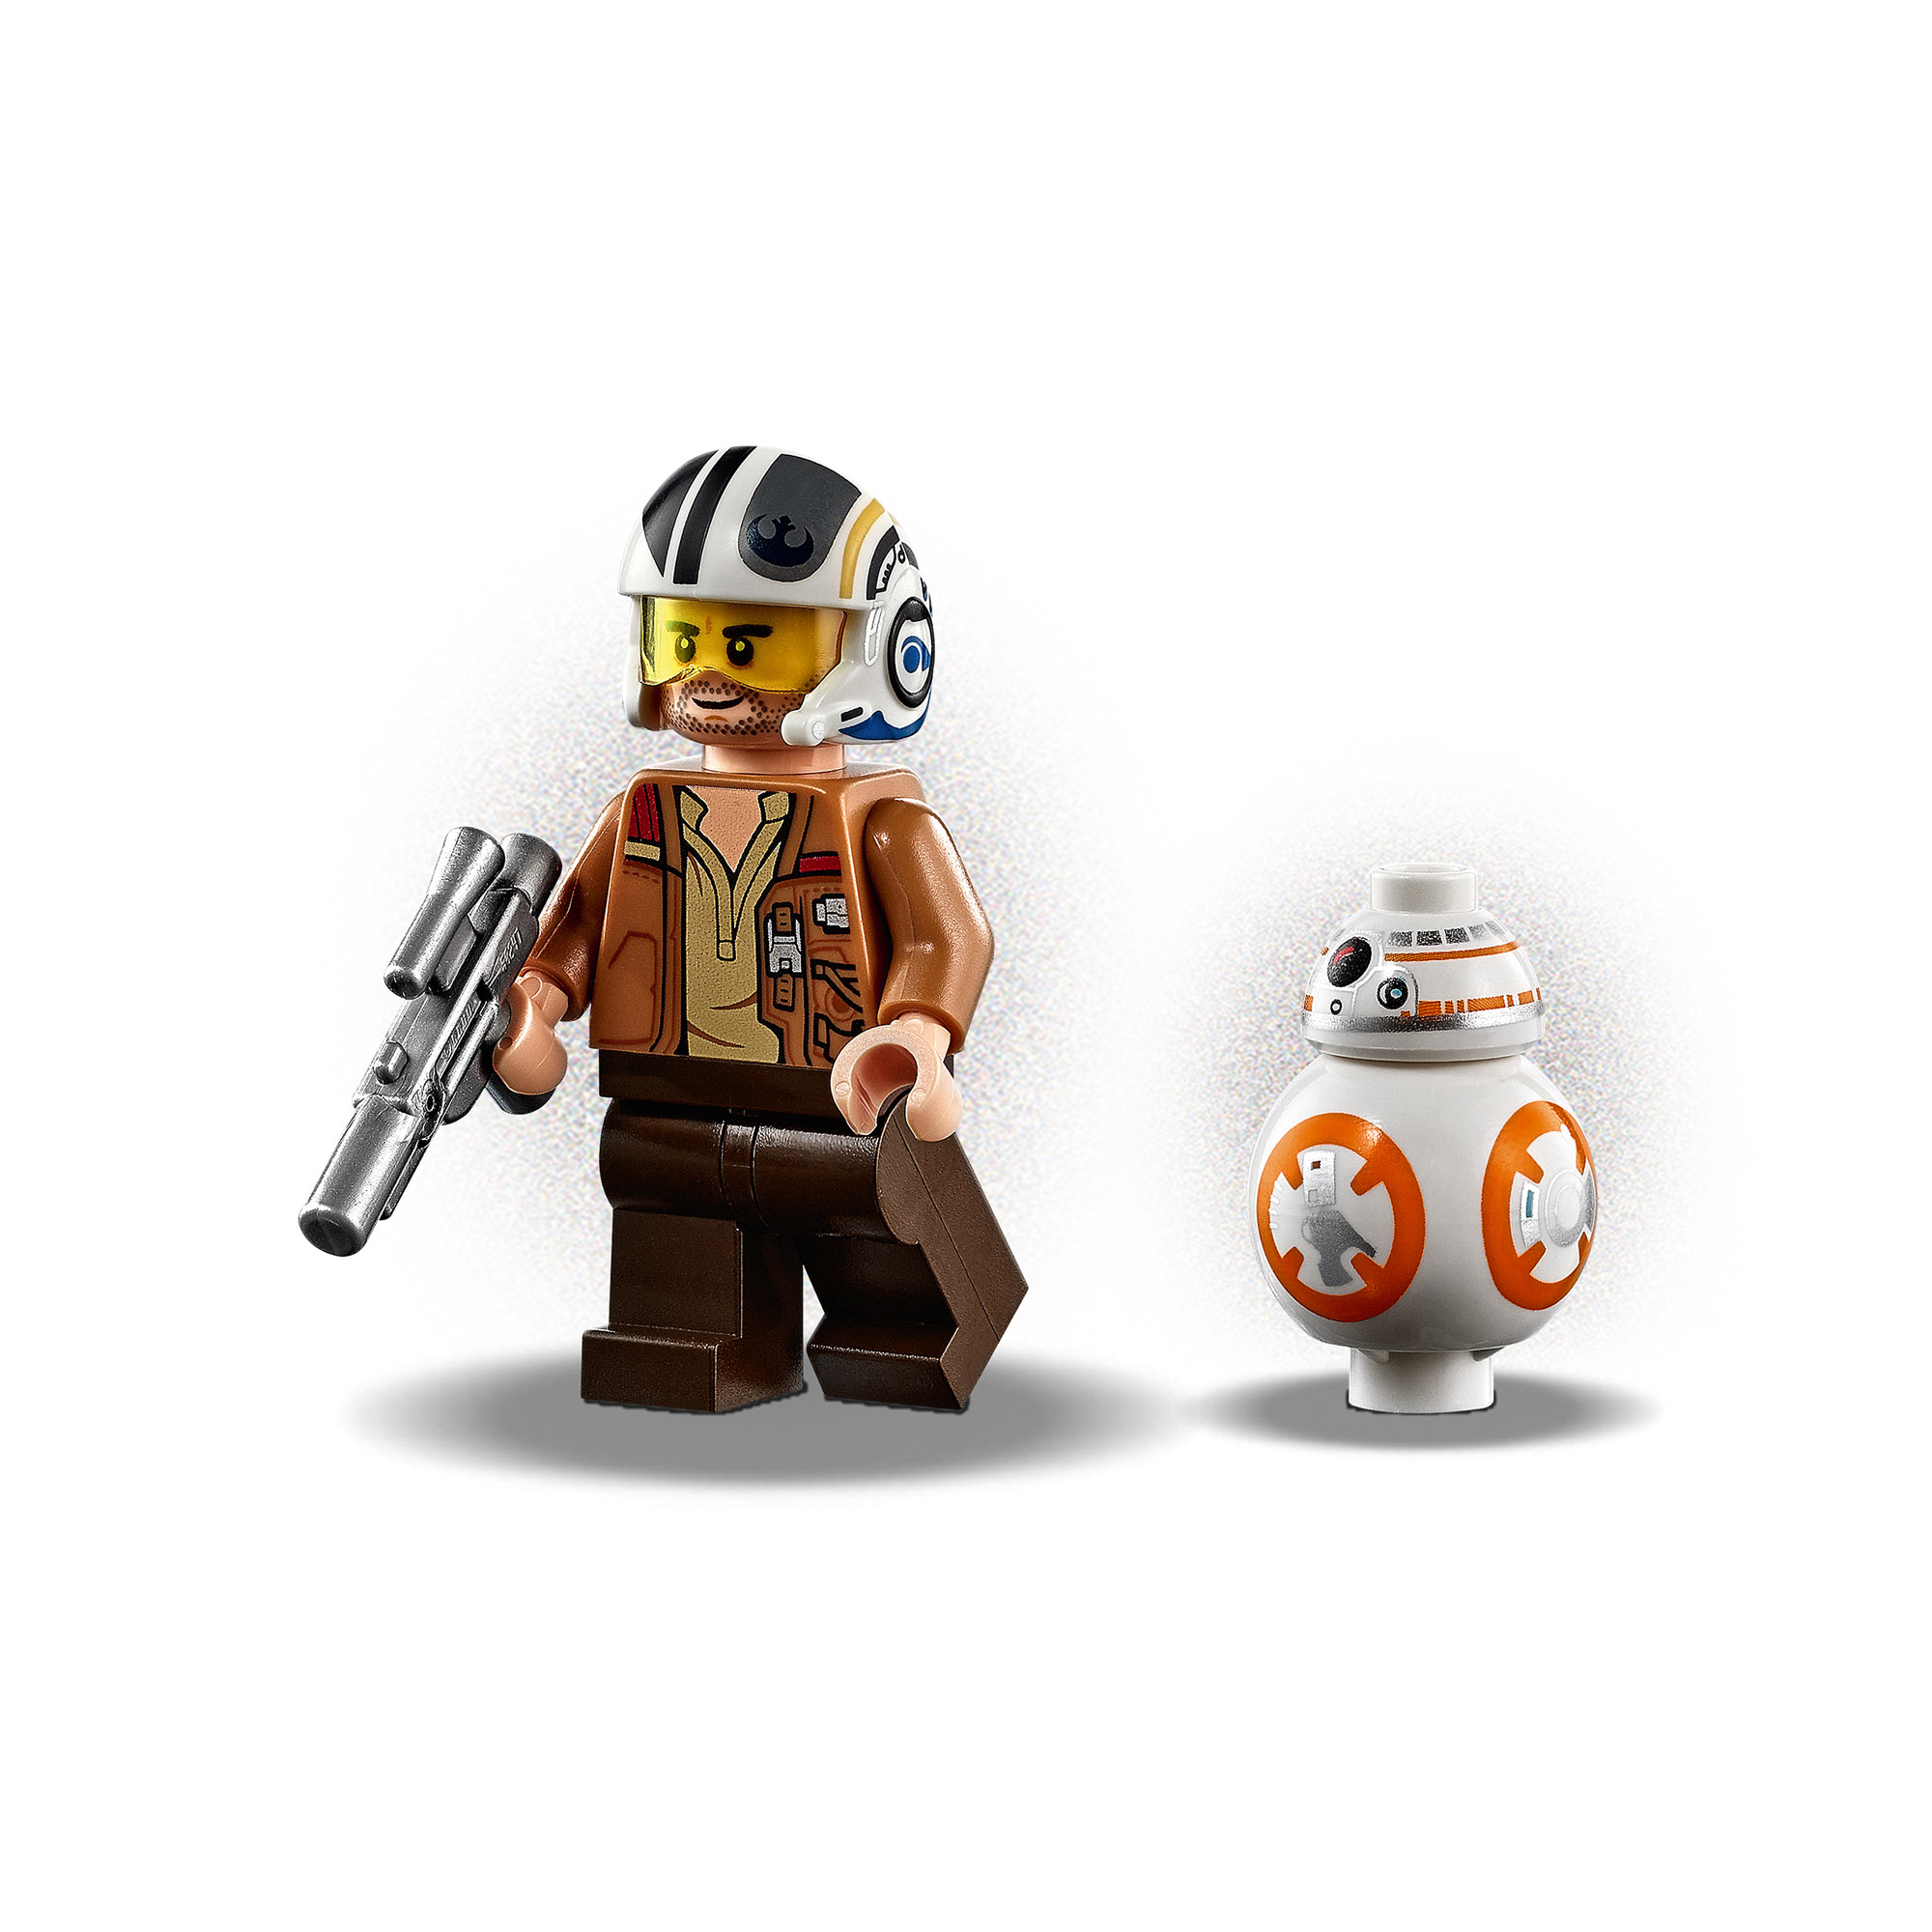 LEGO Star Wars Resistance X-Wing Starfighter, con Minifigure di Poe Dameron, 75297 - LEGO, Star Wars